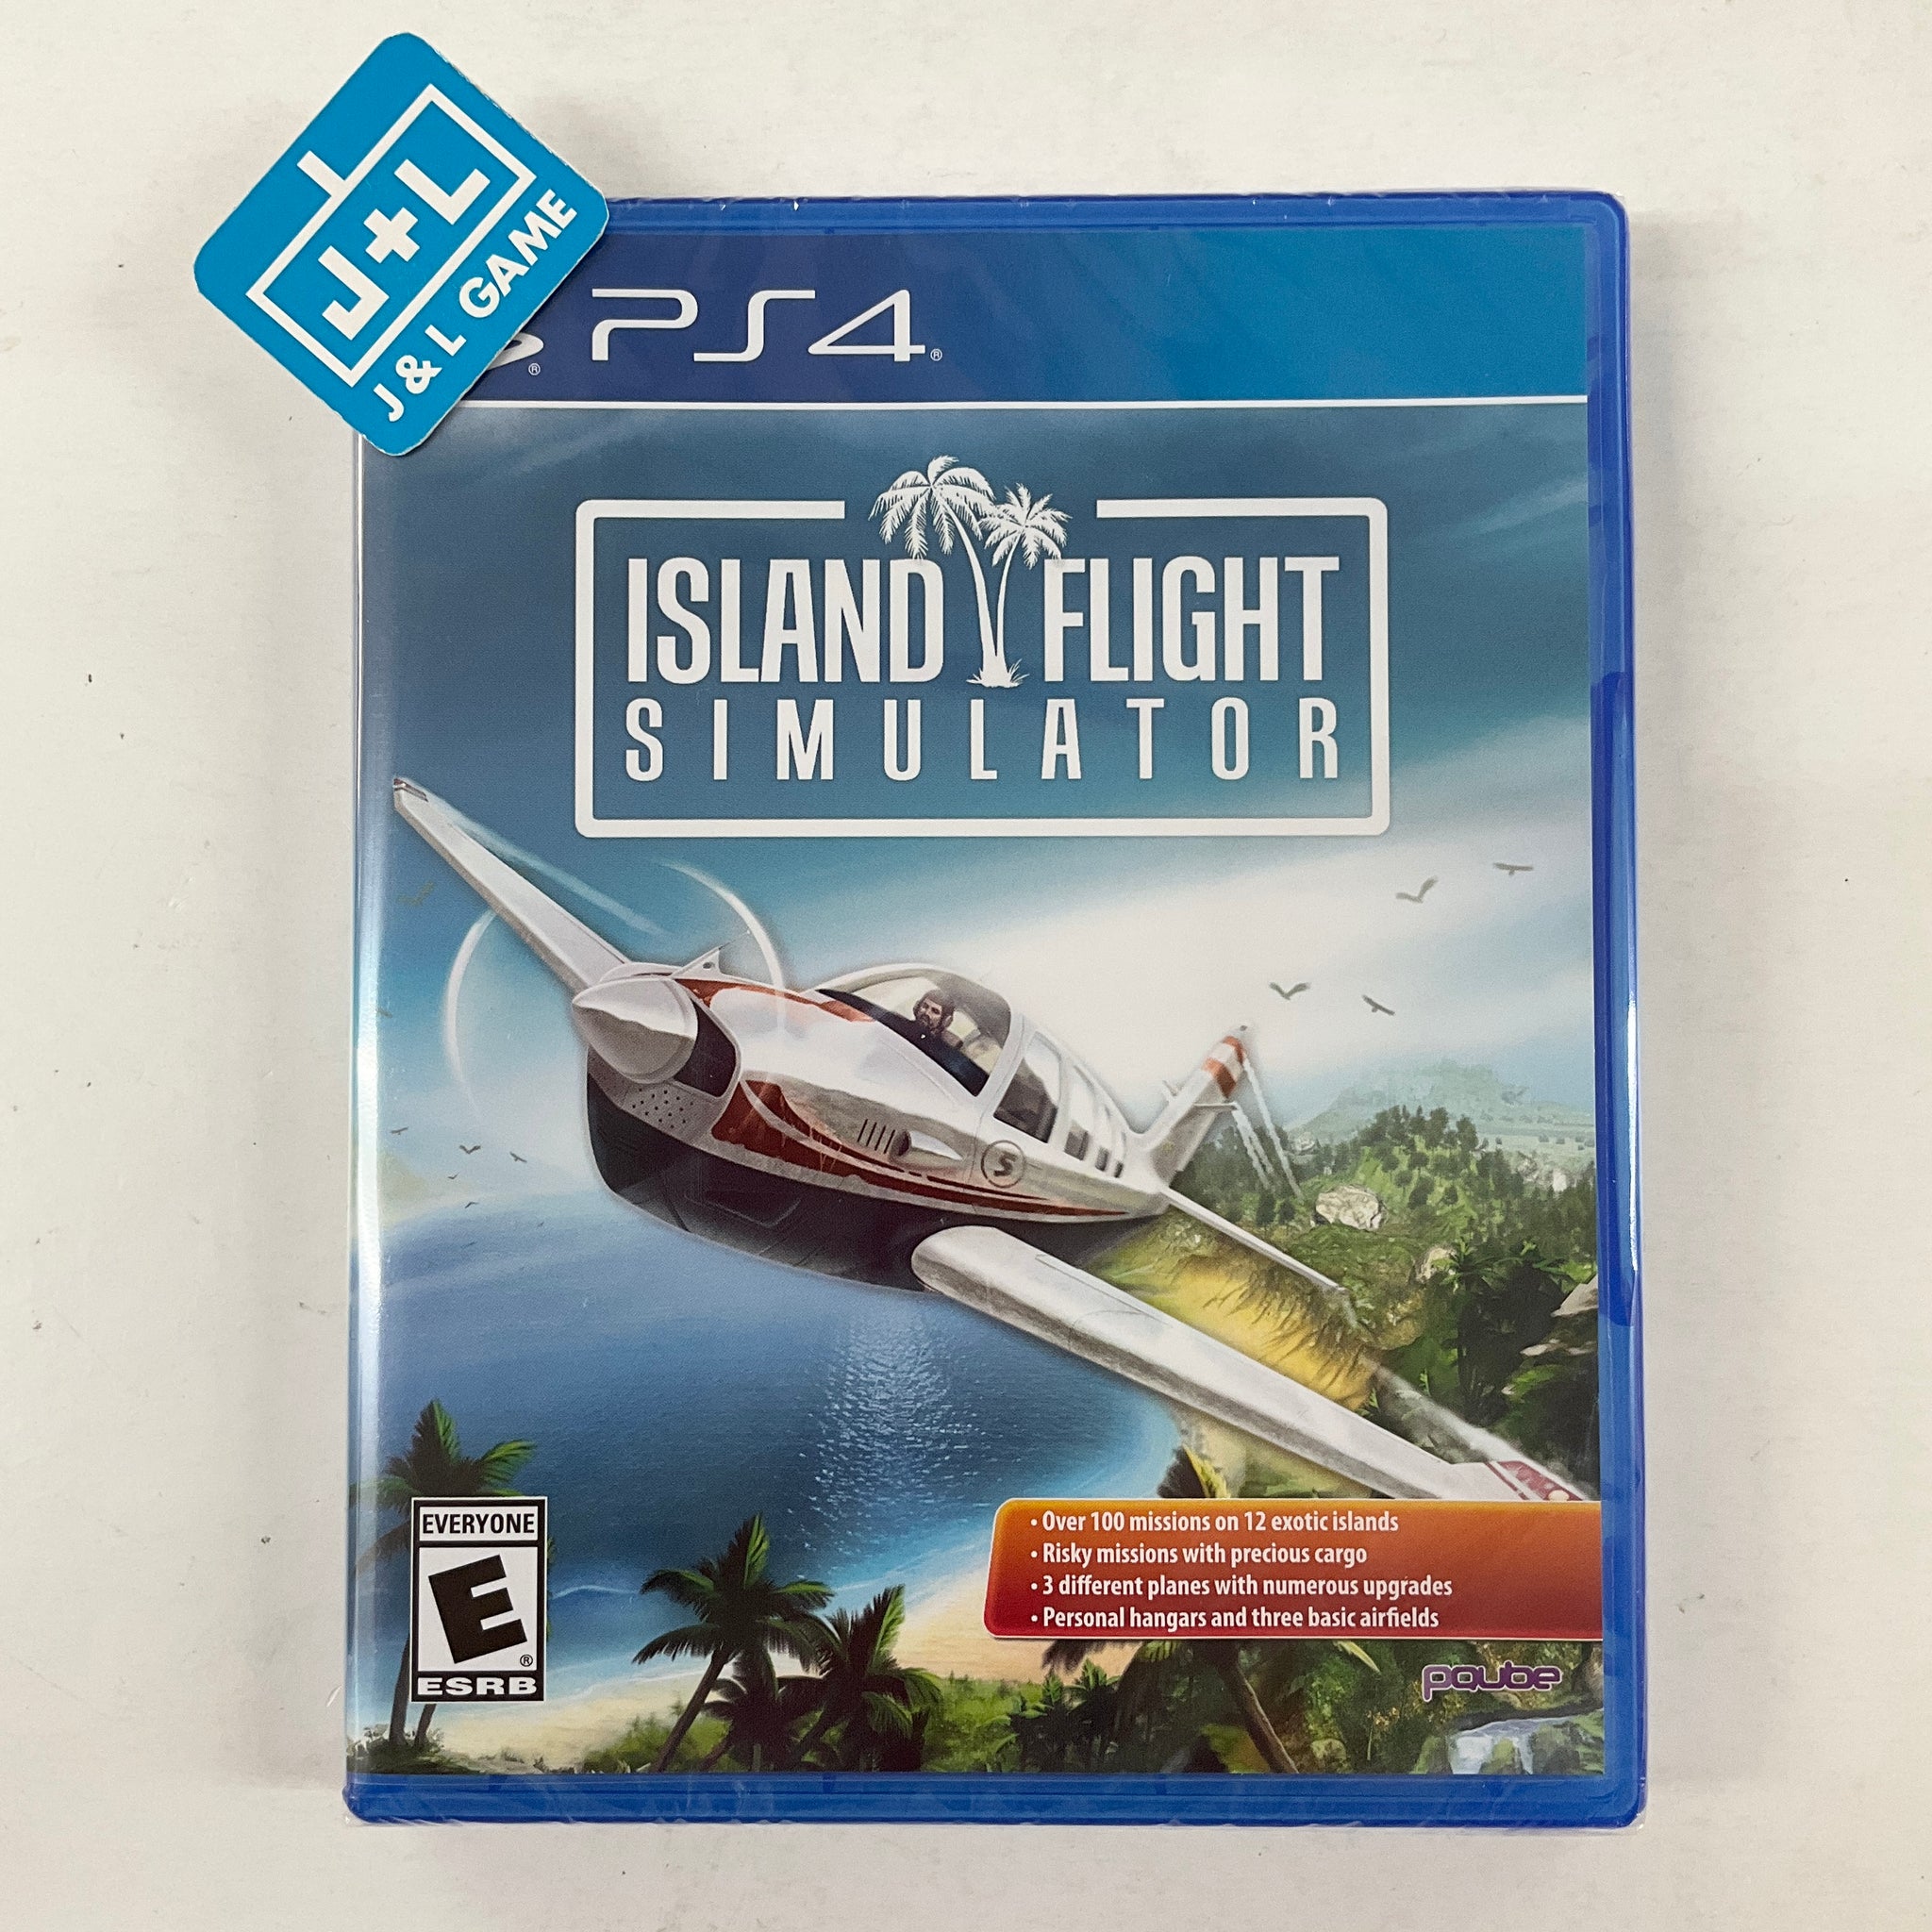 Download & Play Microsoft Flight Simulator FREE on PS4 Game - Hut